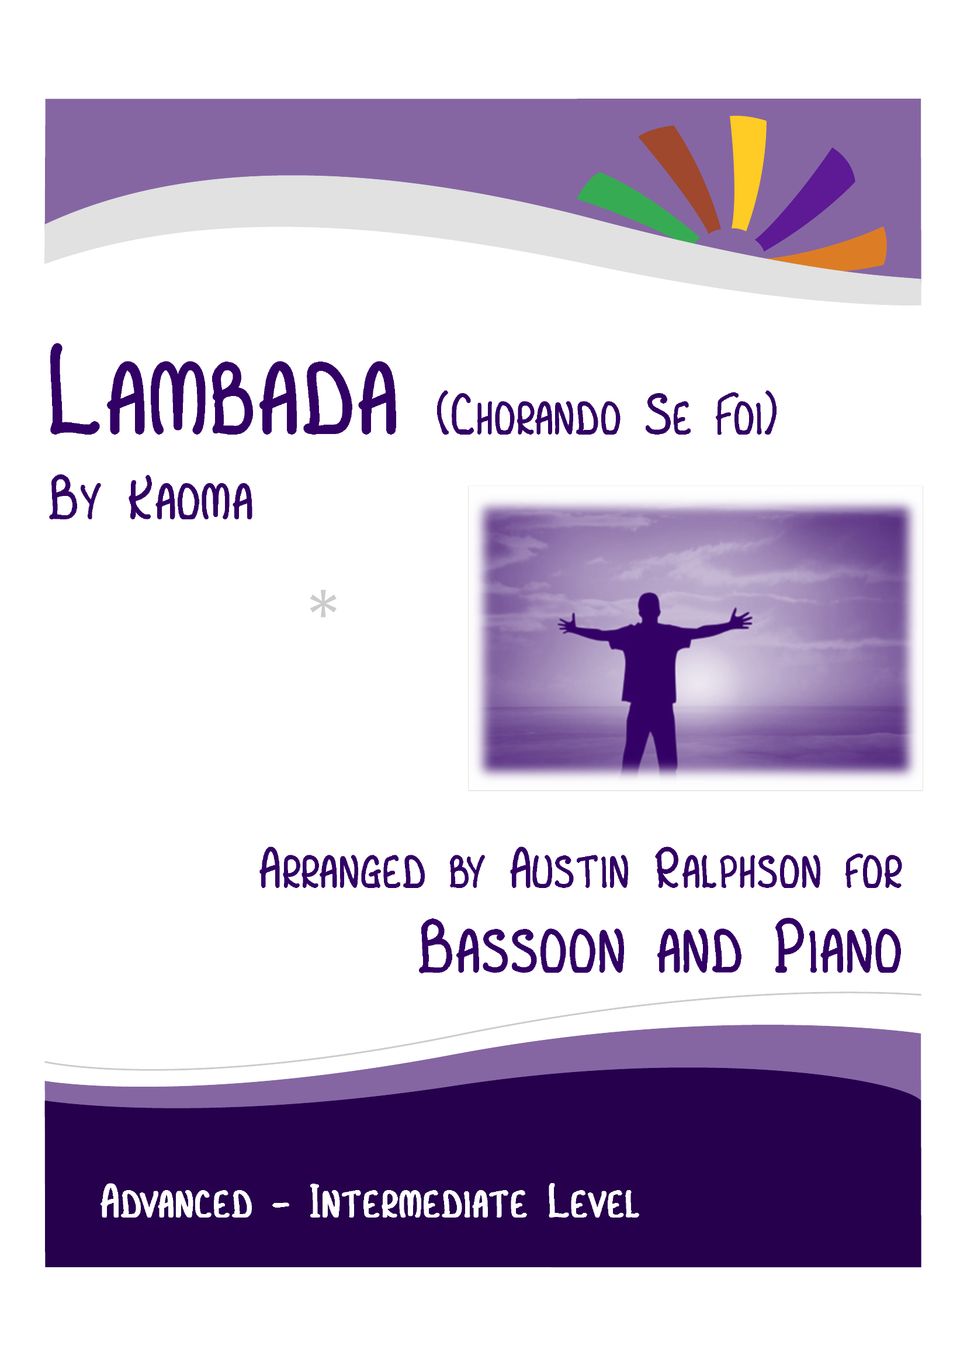 Kaoma - Chorando Se Foi (Lambada) - bassoon and piano by Austin Ralphson